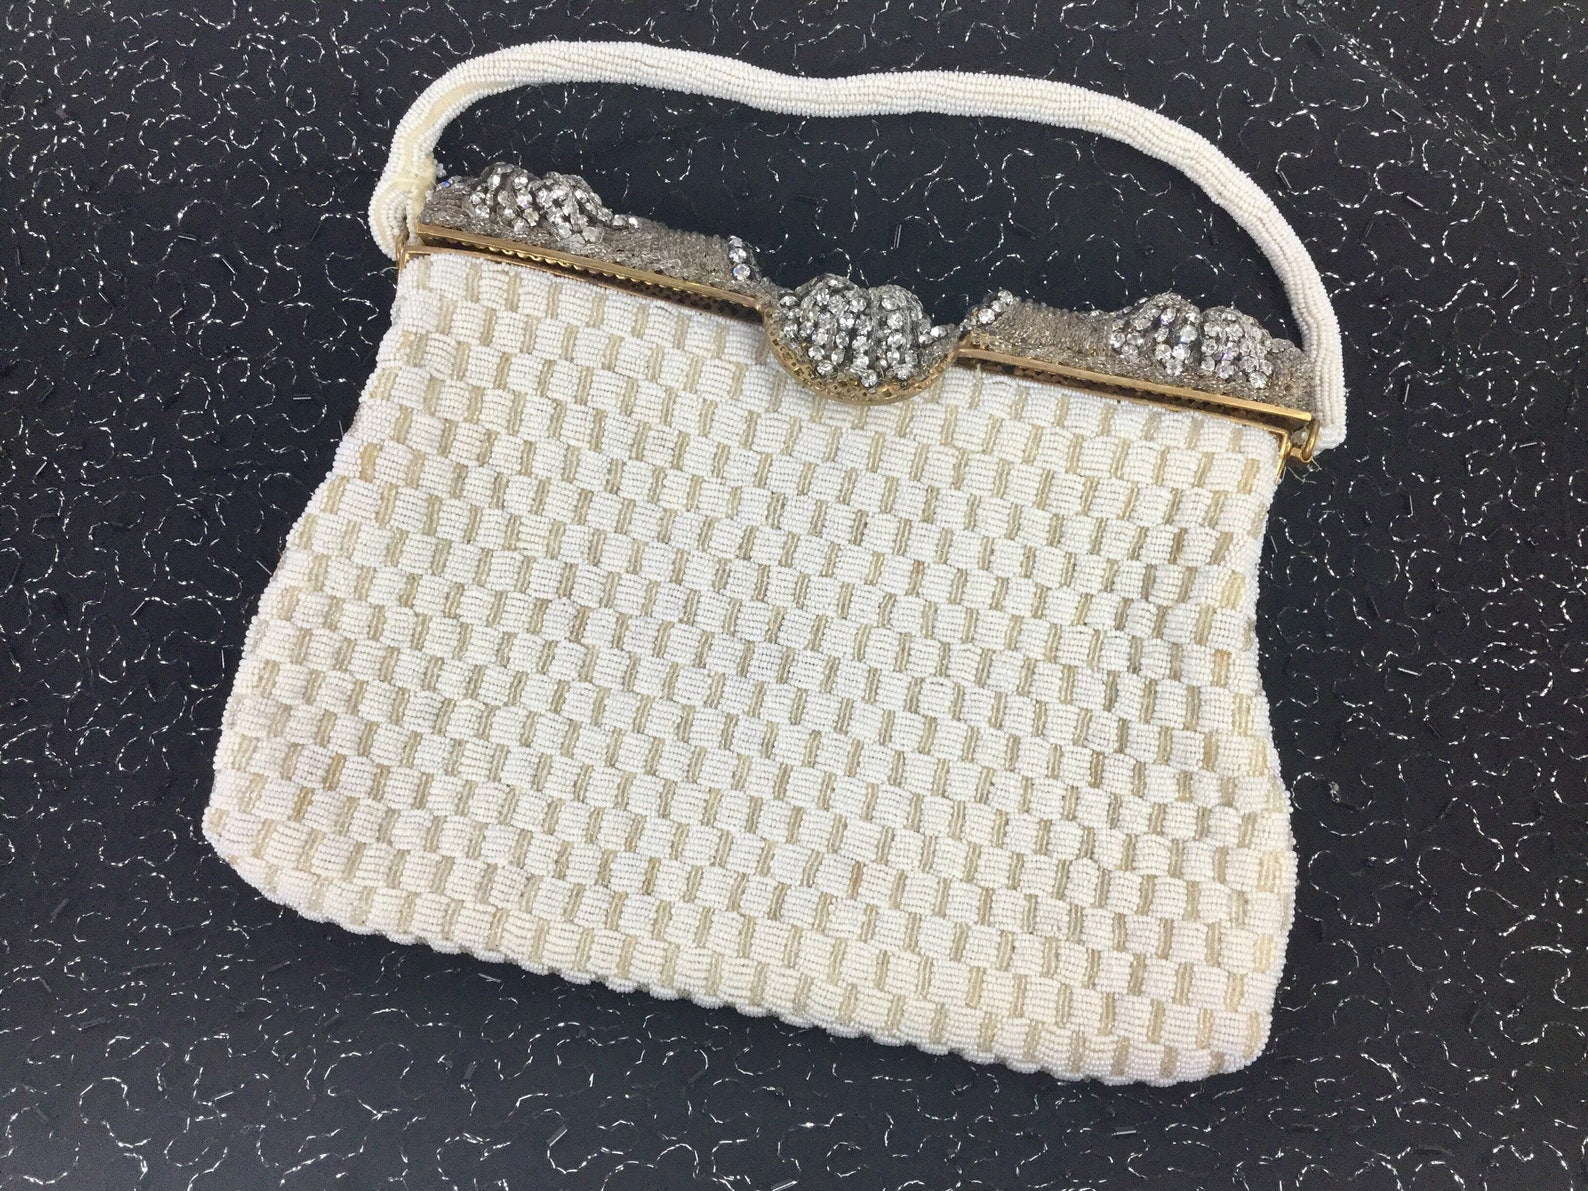 La Regale White Beaded Vintage Handbag. Italian glass beaded evening p –  Joseph Jane Vintage